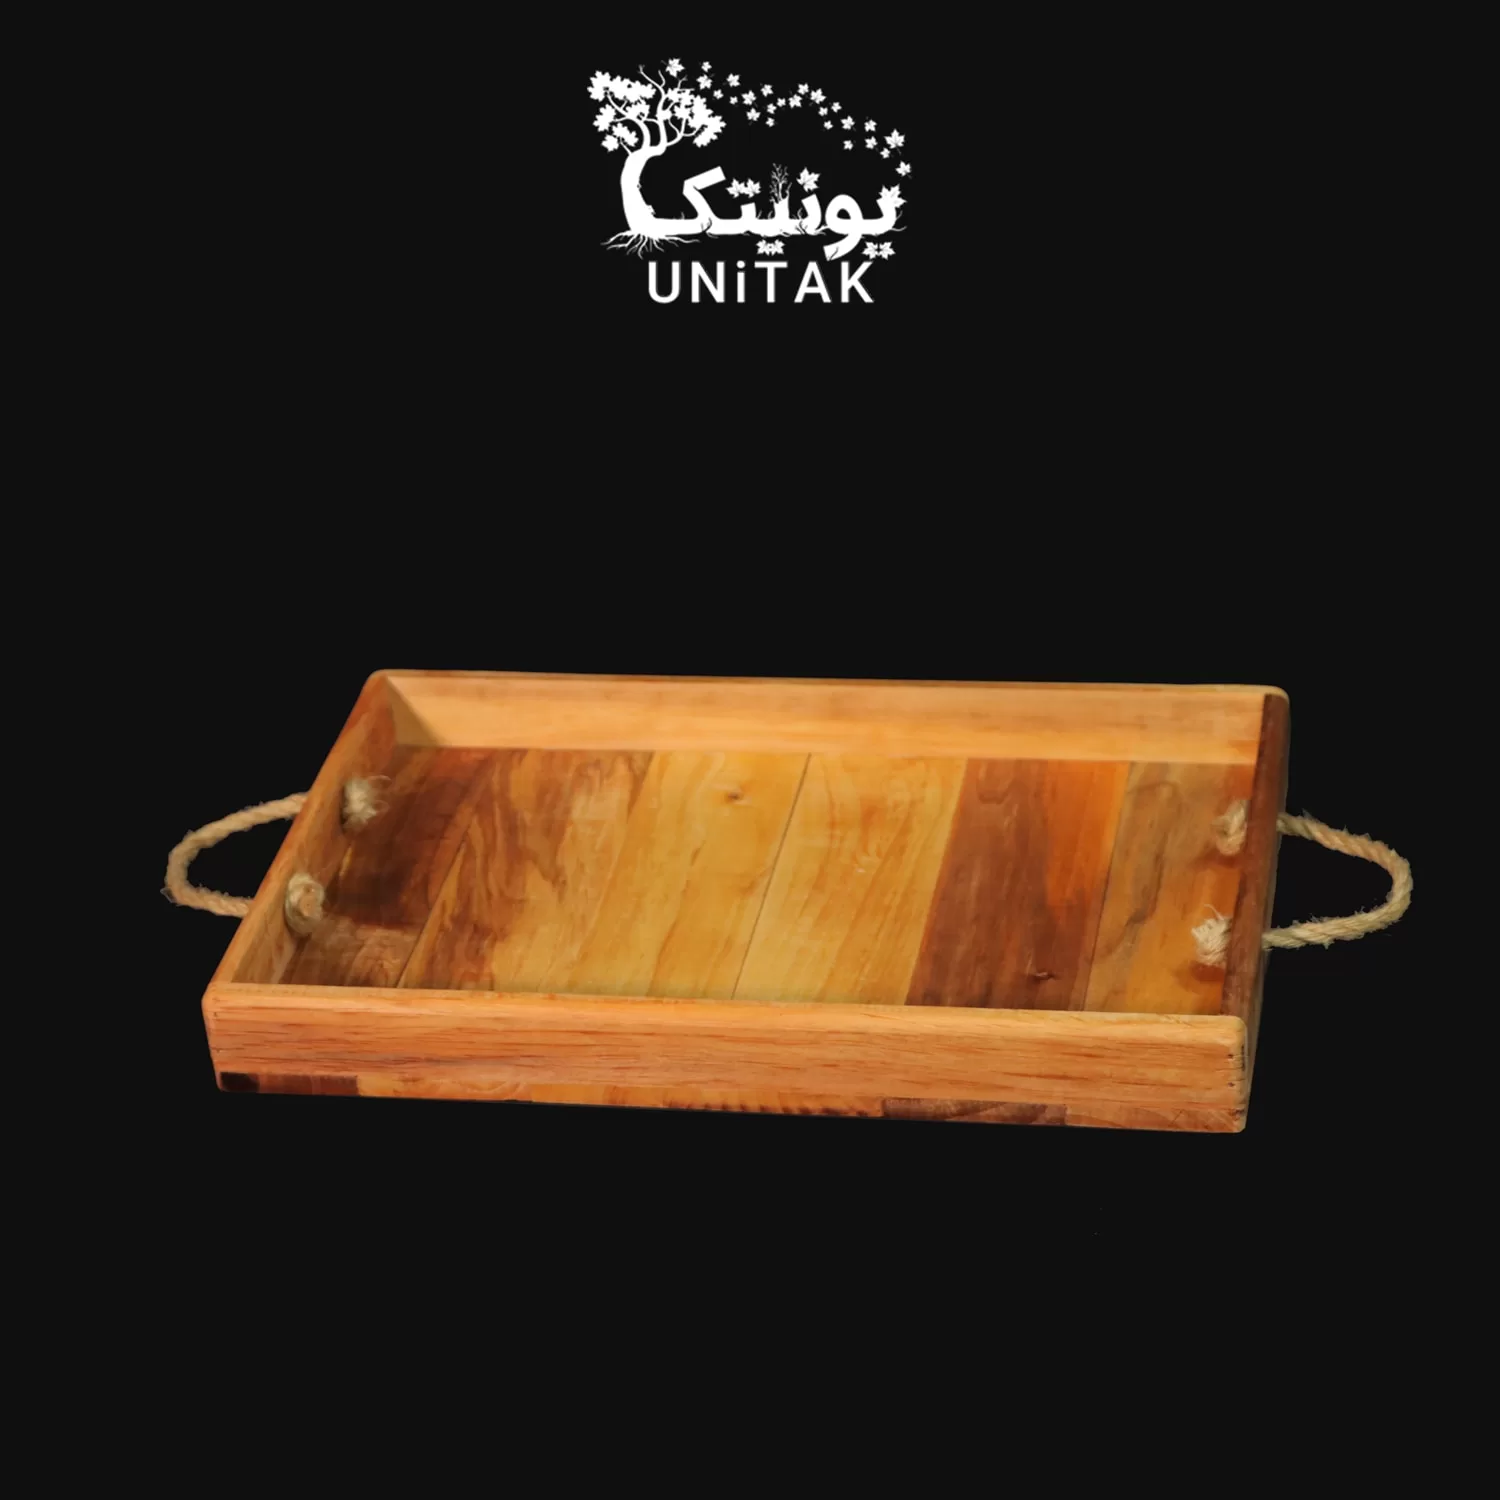 Unitak wooden tray Model Rasta code 86